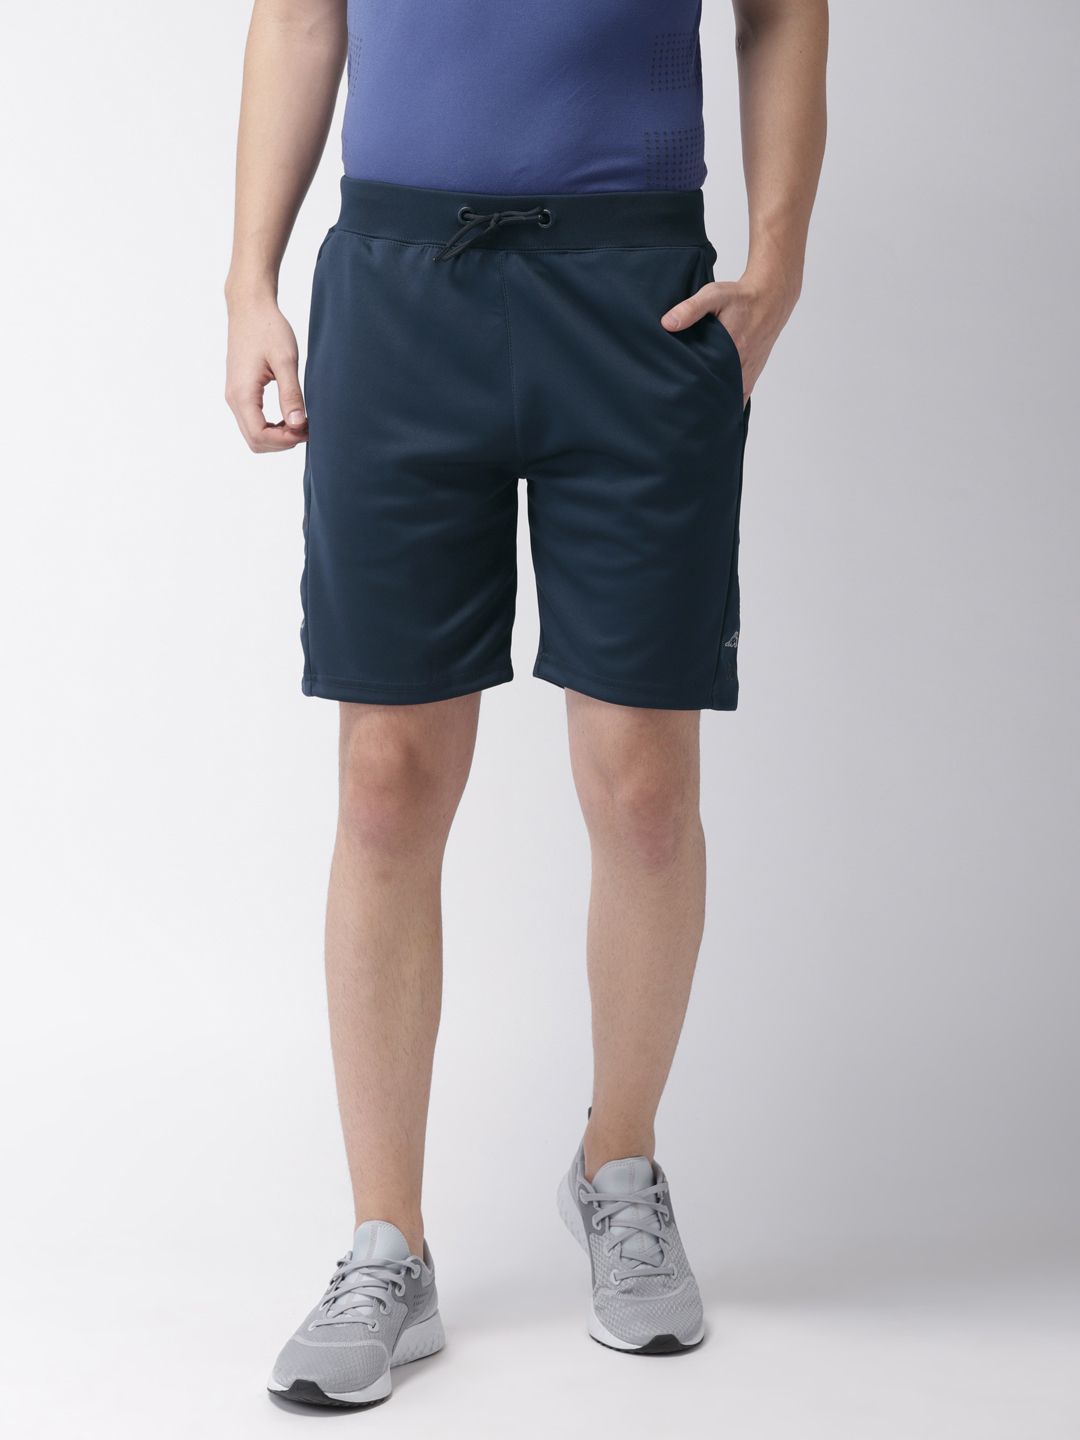 Kappa Navy Blue Shorts for men price - Best buy price in India October ...